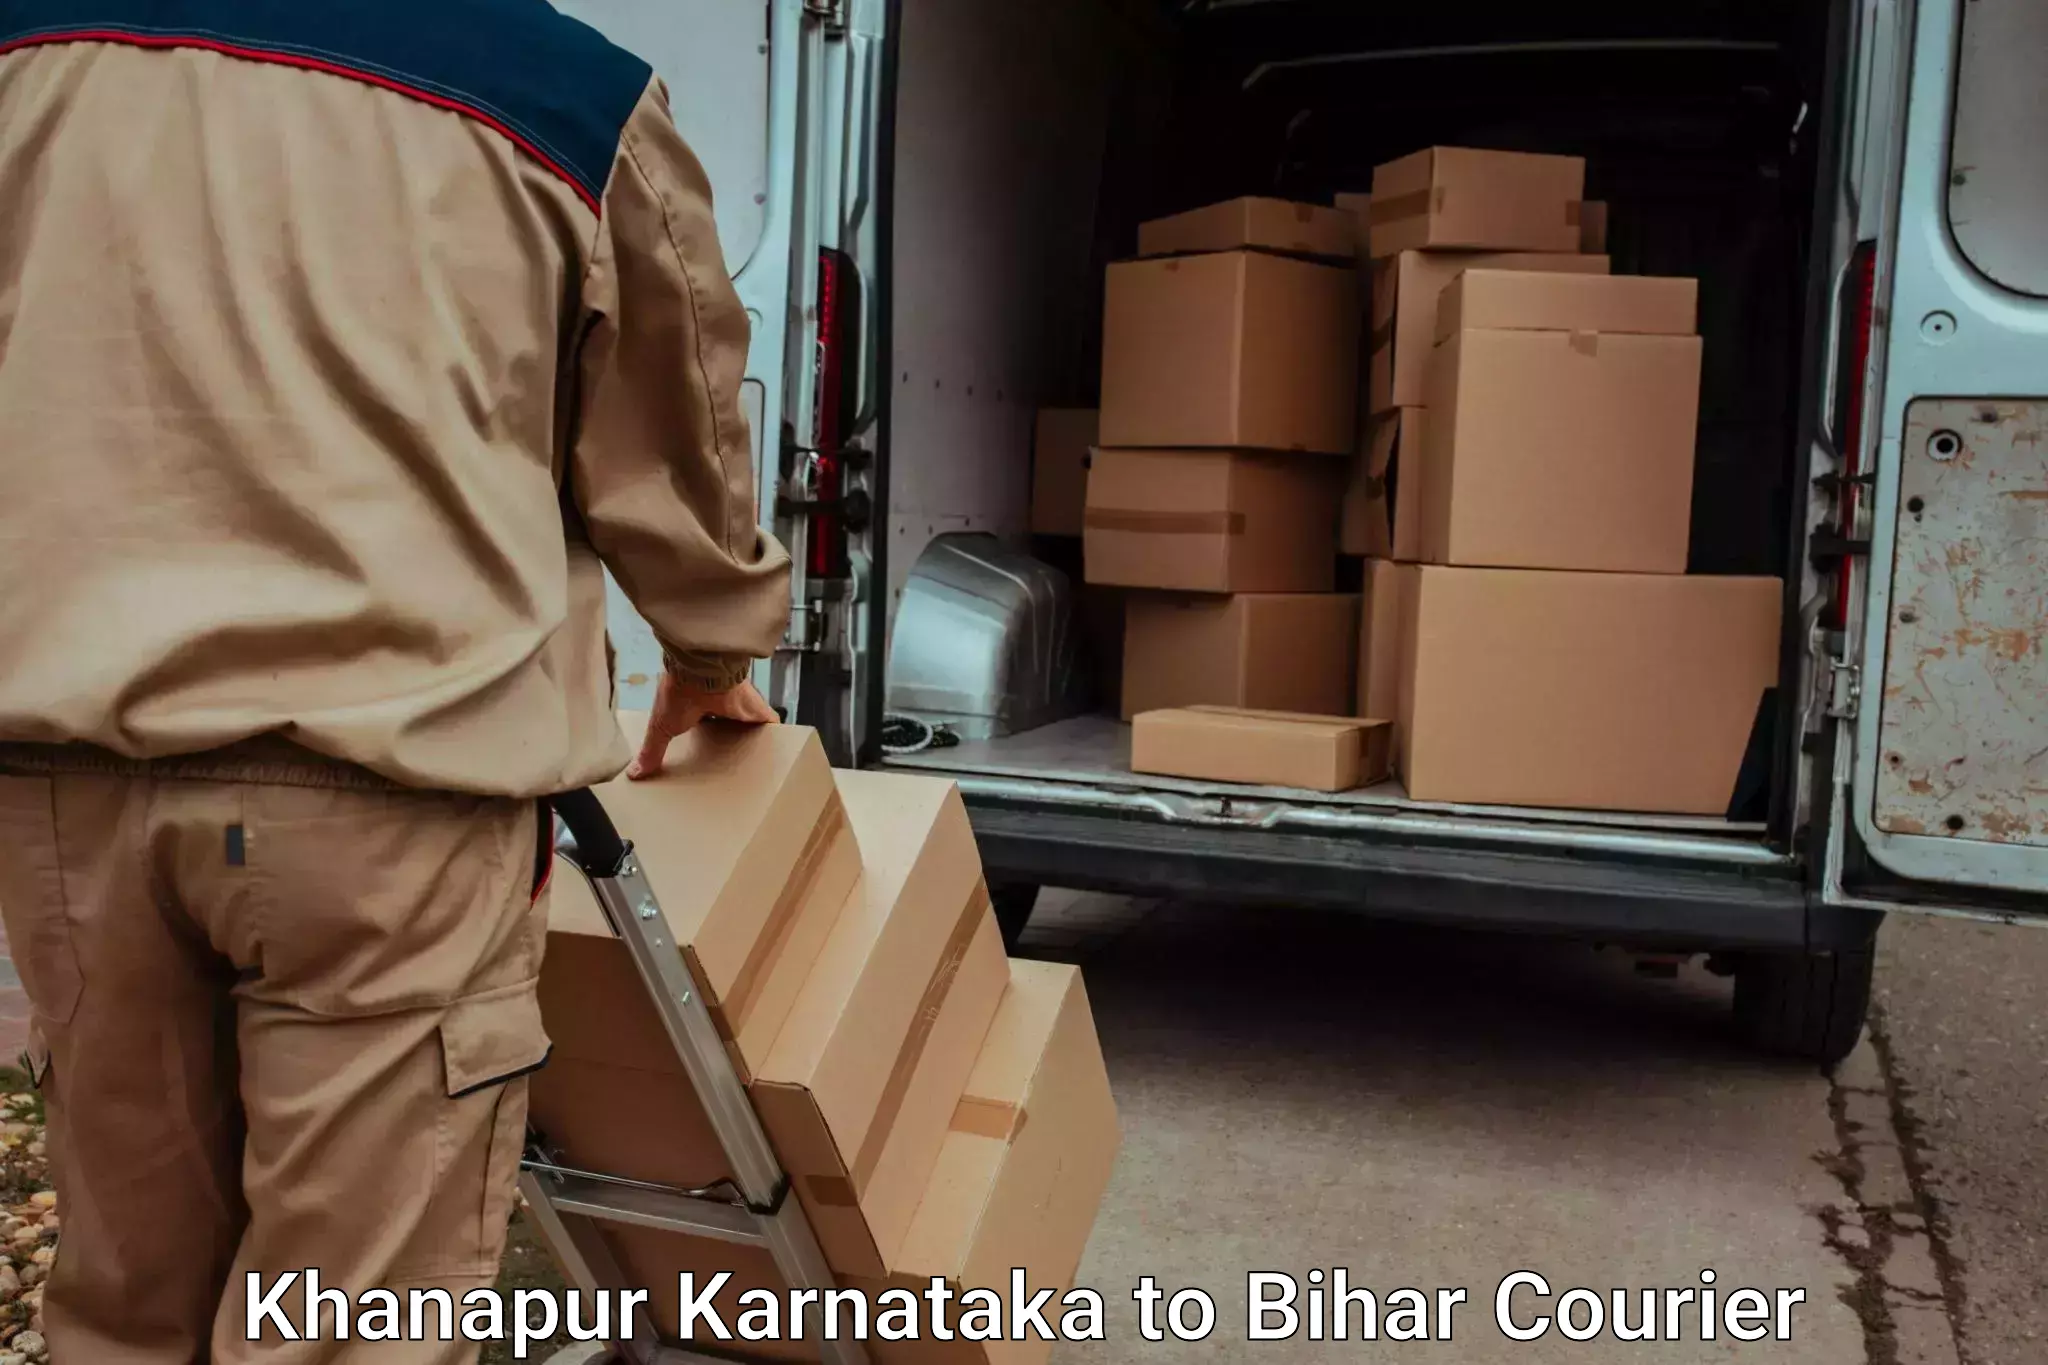 Professional movers Khanapur Karnataka to Patna